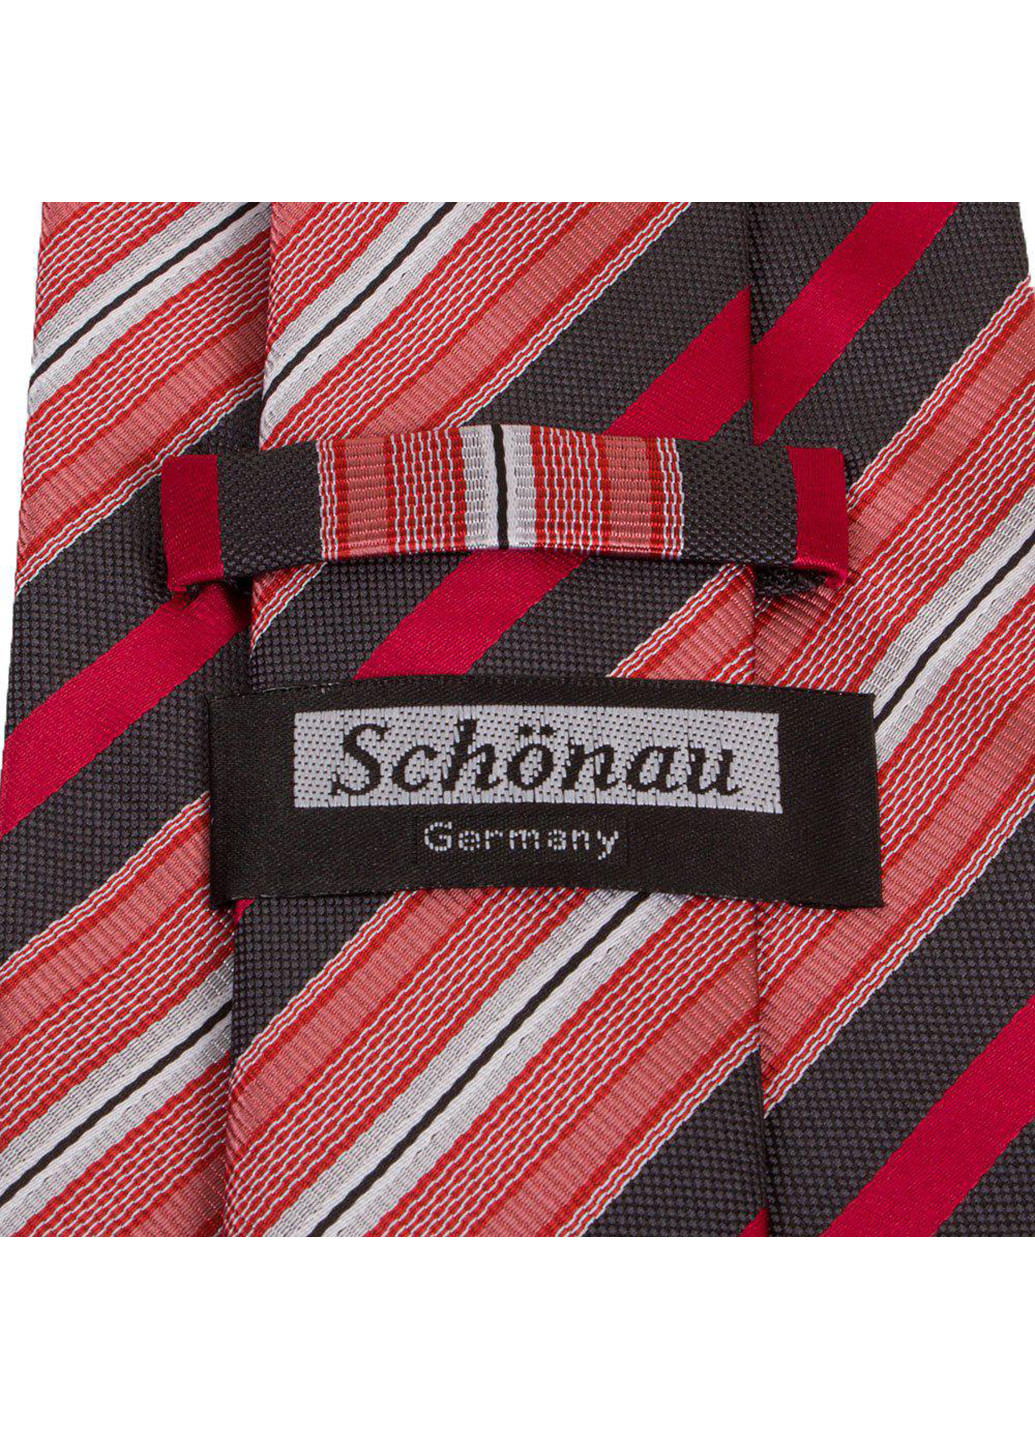 Мужской галстук 147,5 см Schonau & Houcken (252127897)